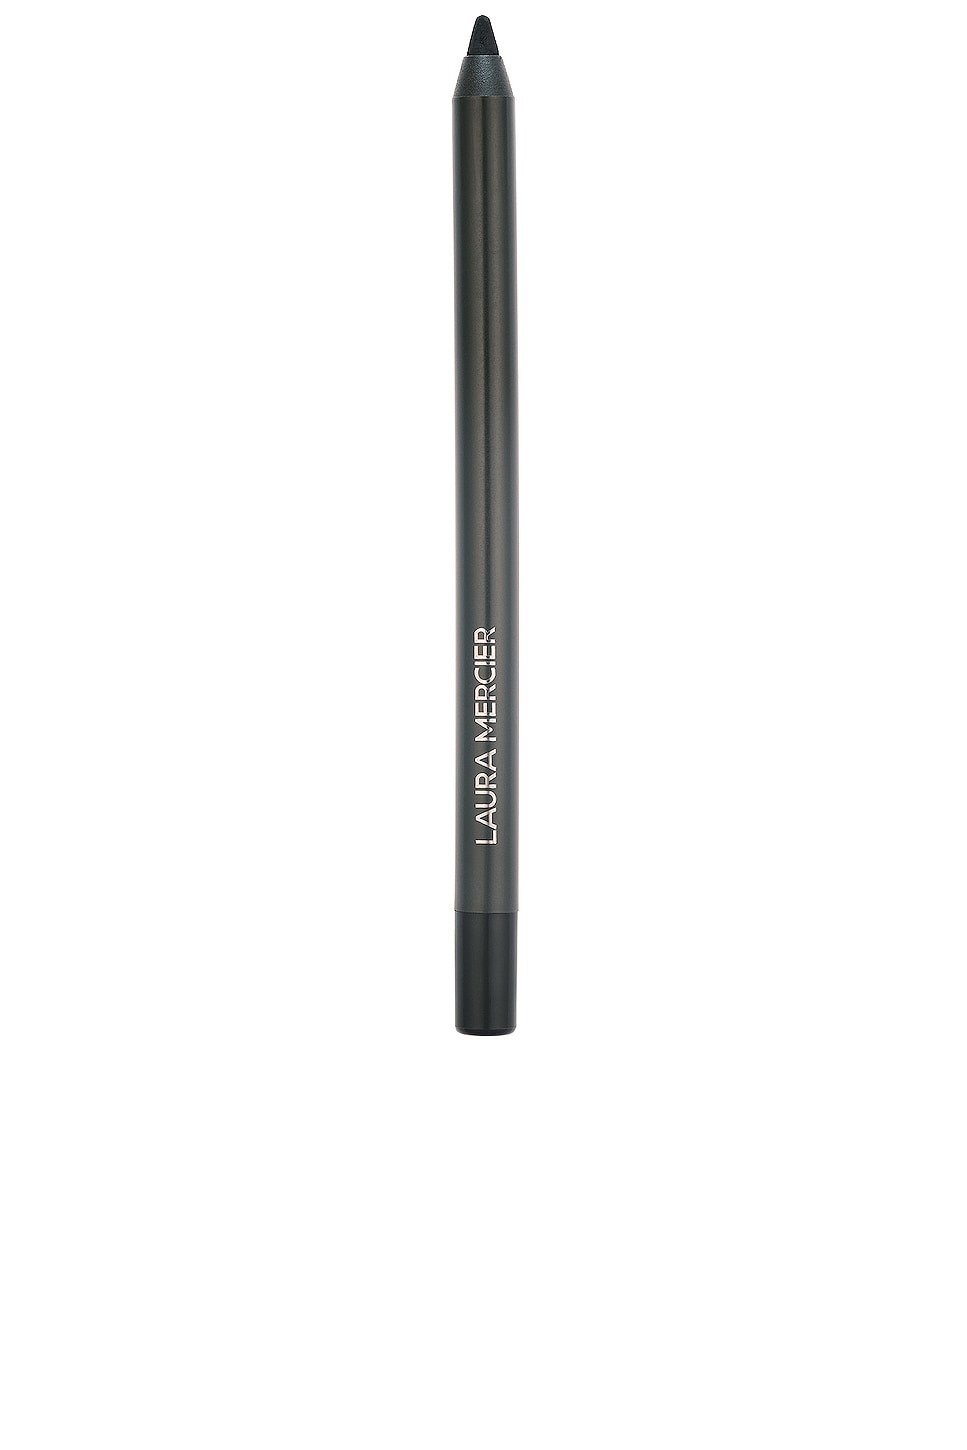 Caviar Tightline Eyeliner Pencil in Black